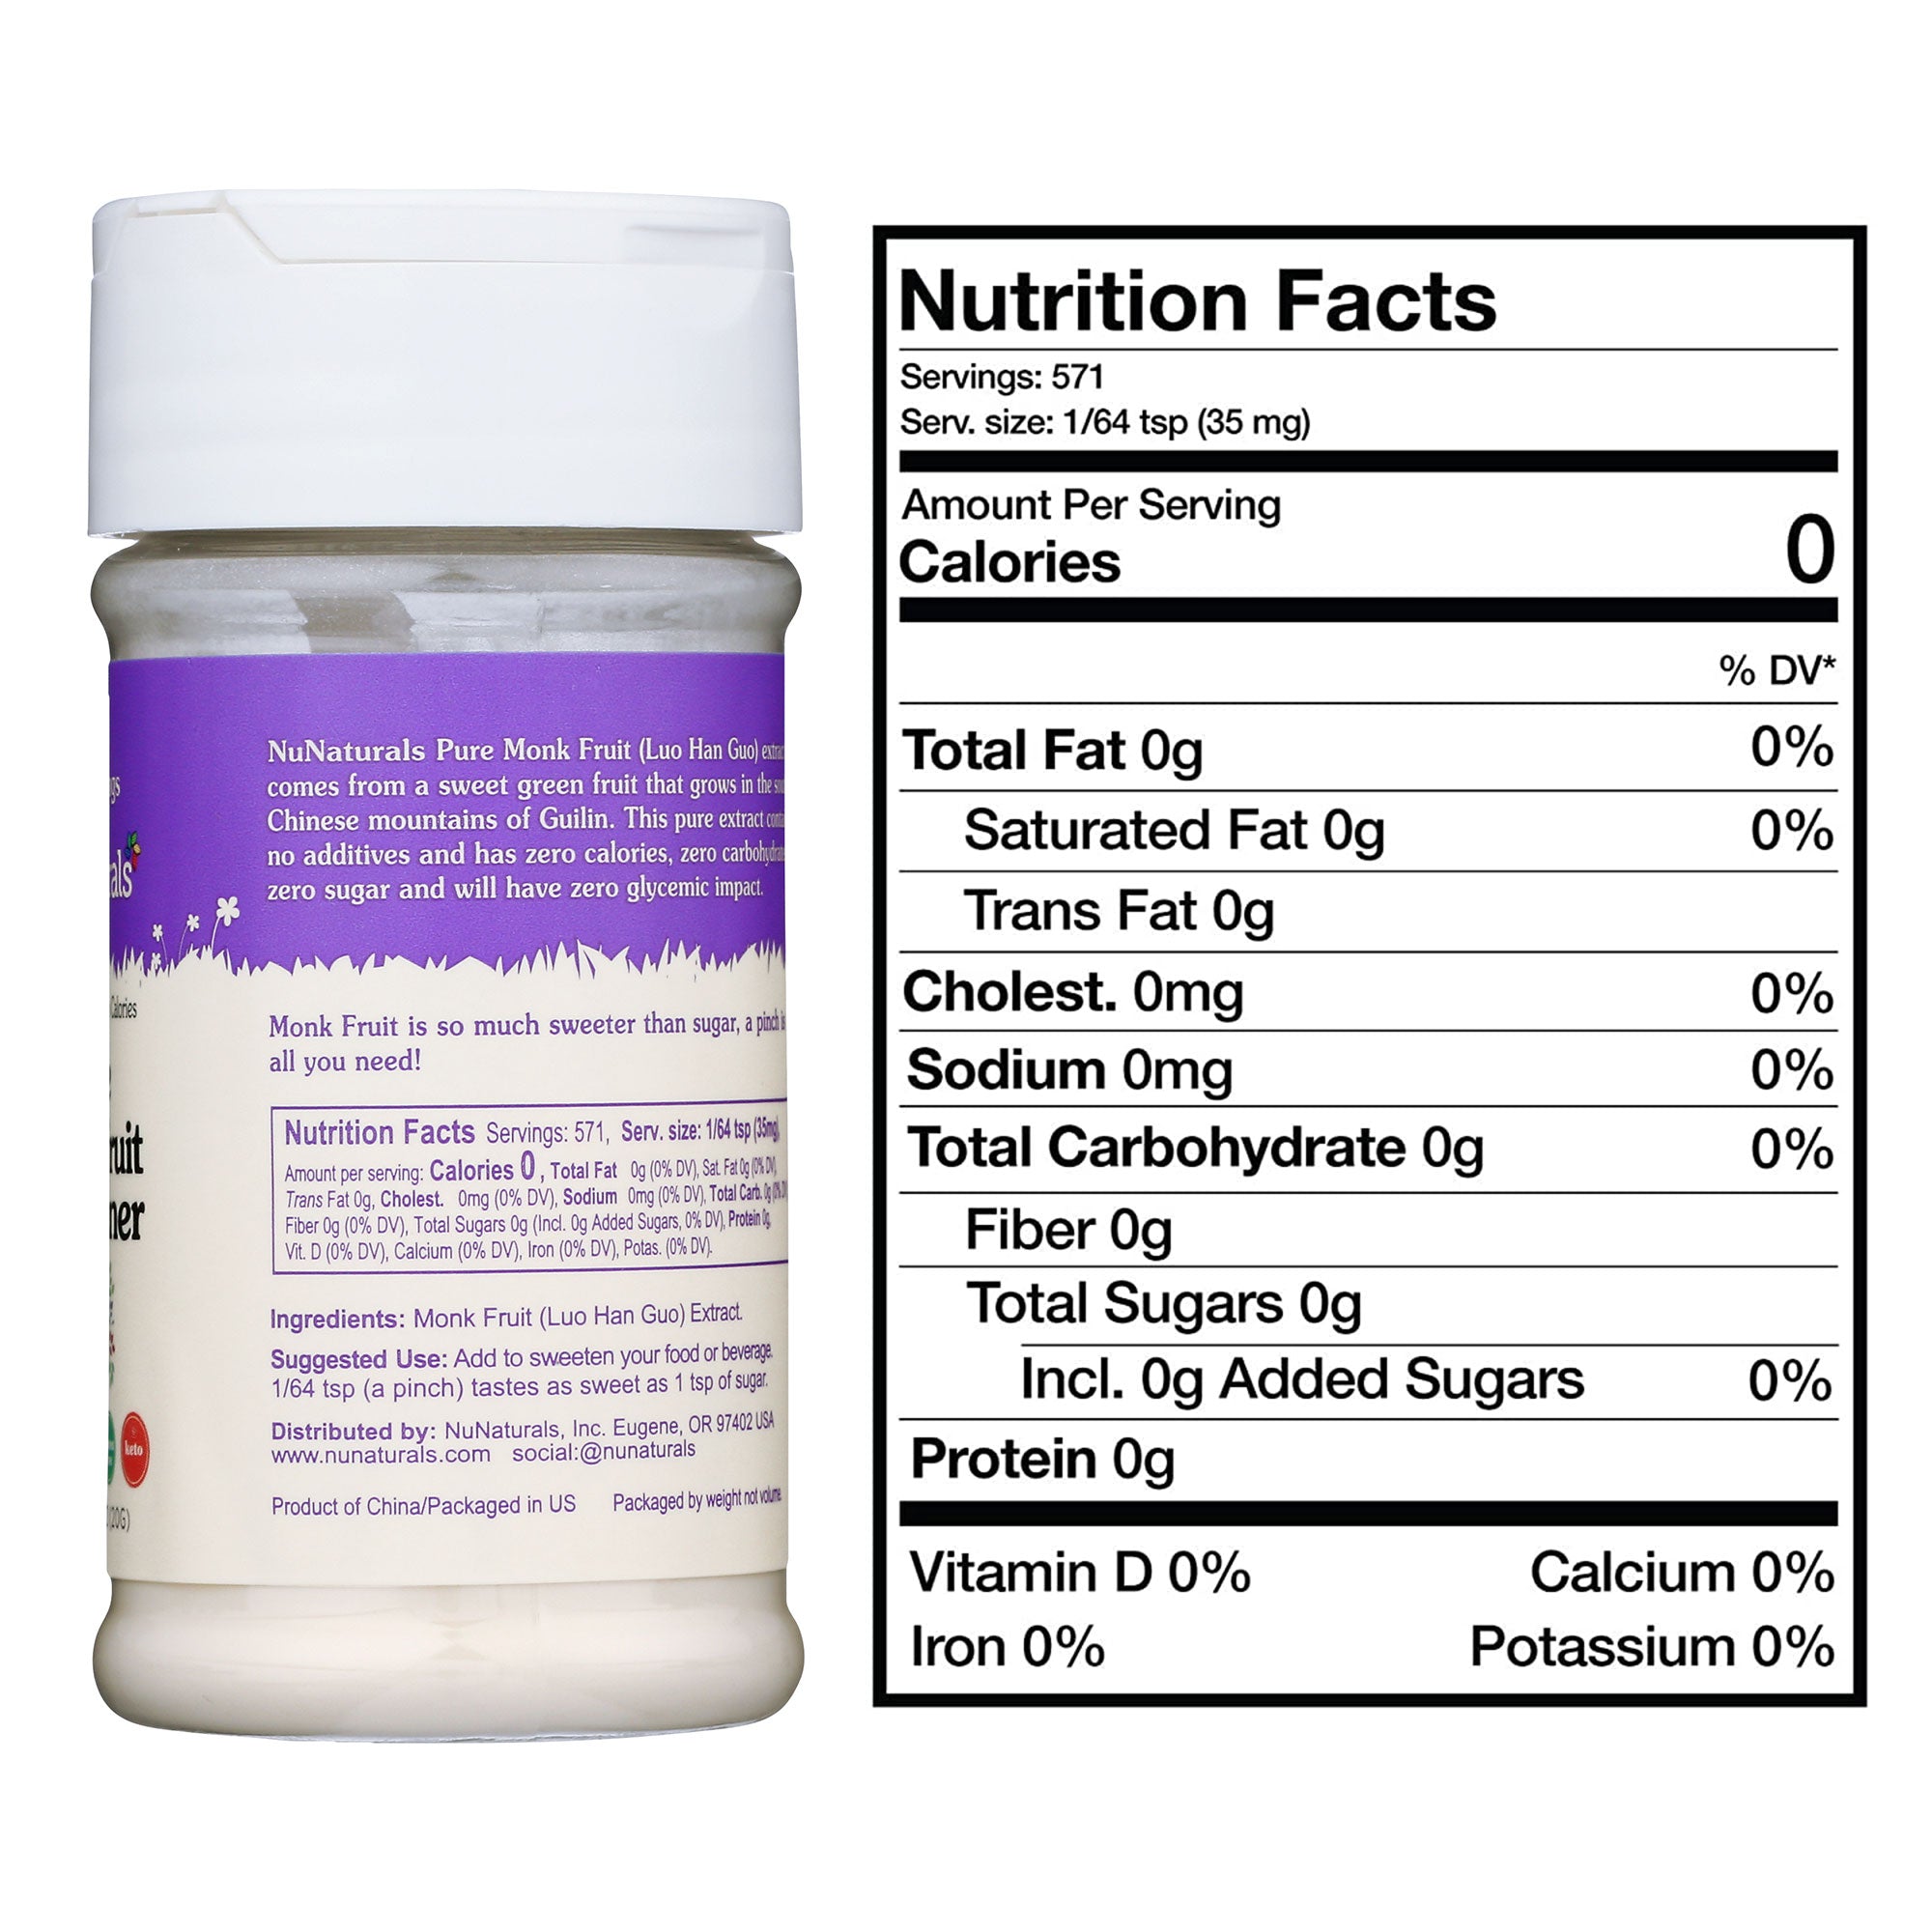 NuNaturals Pure Monk Fruit Sweetener Nutrition Facts